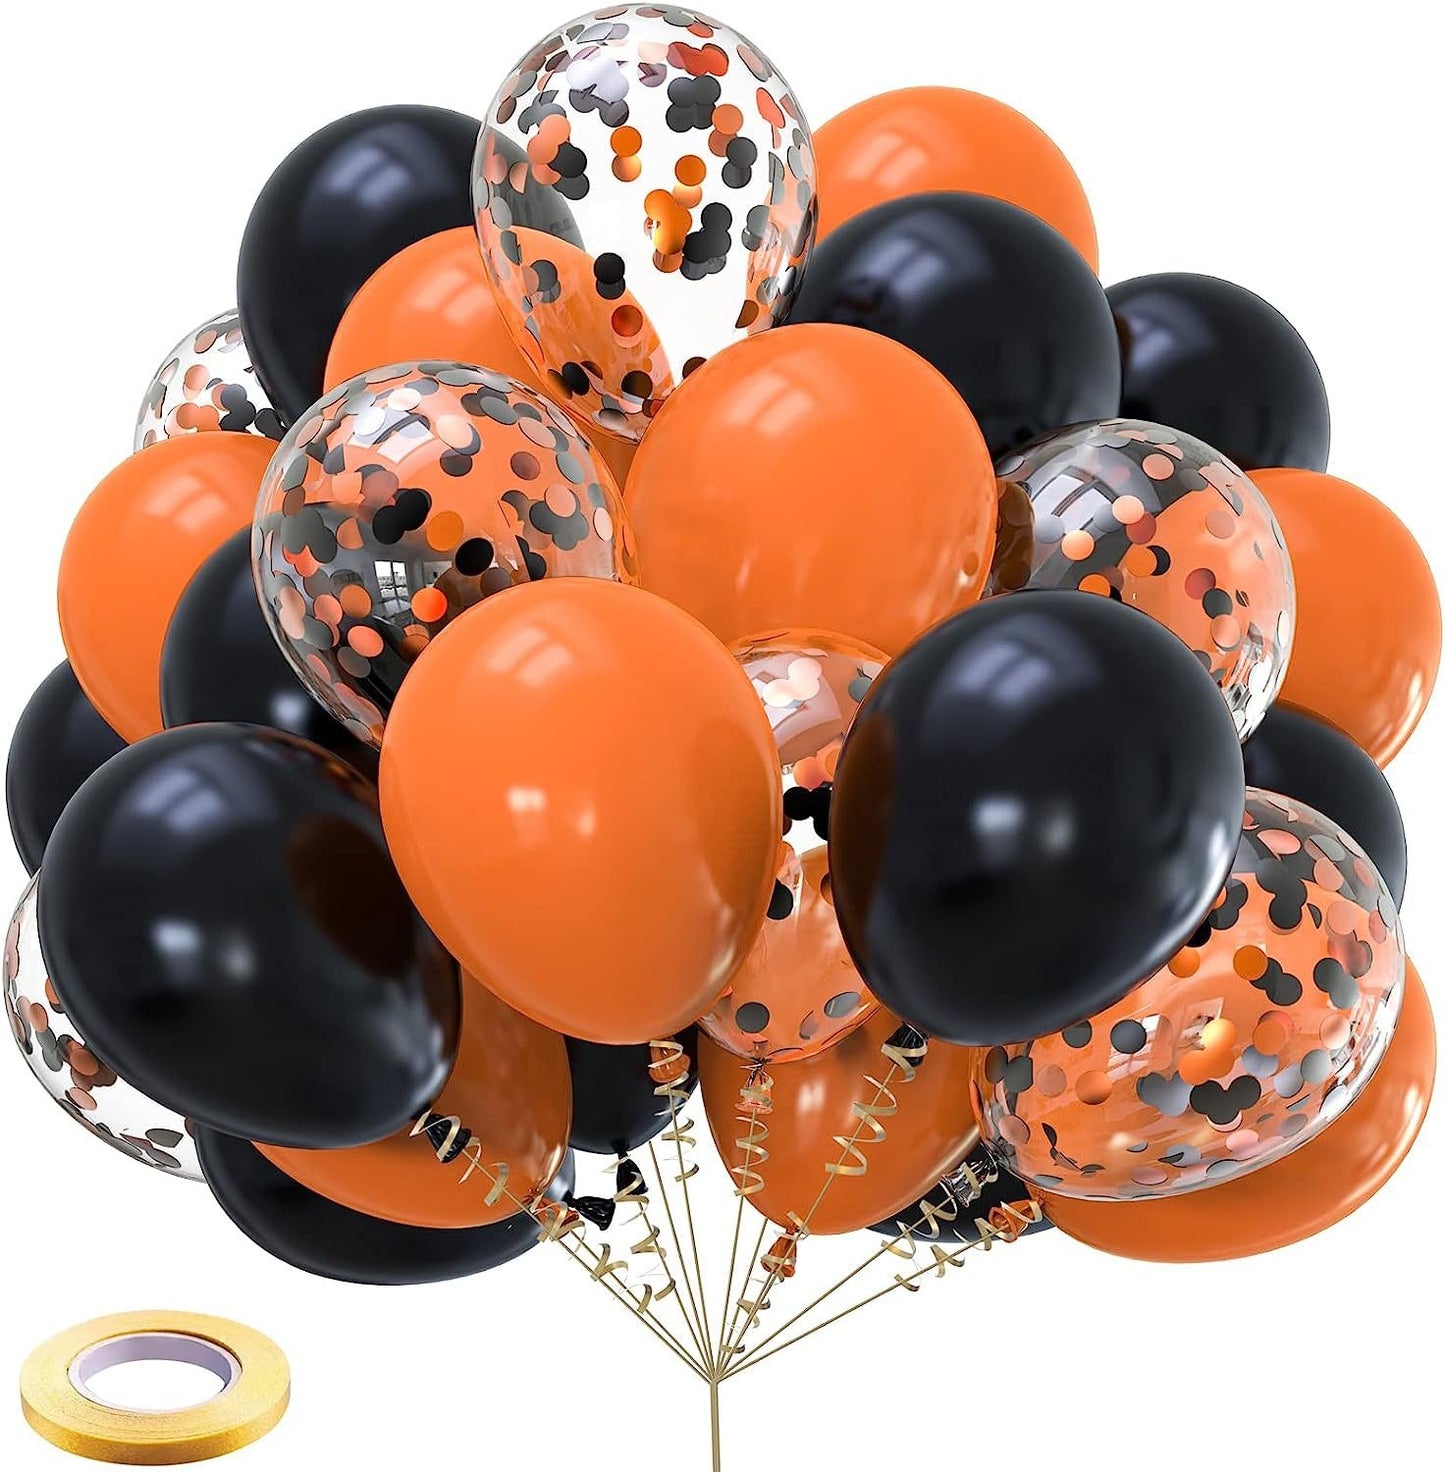 12-inch Halloween Horror Balloon Orange Black